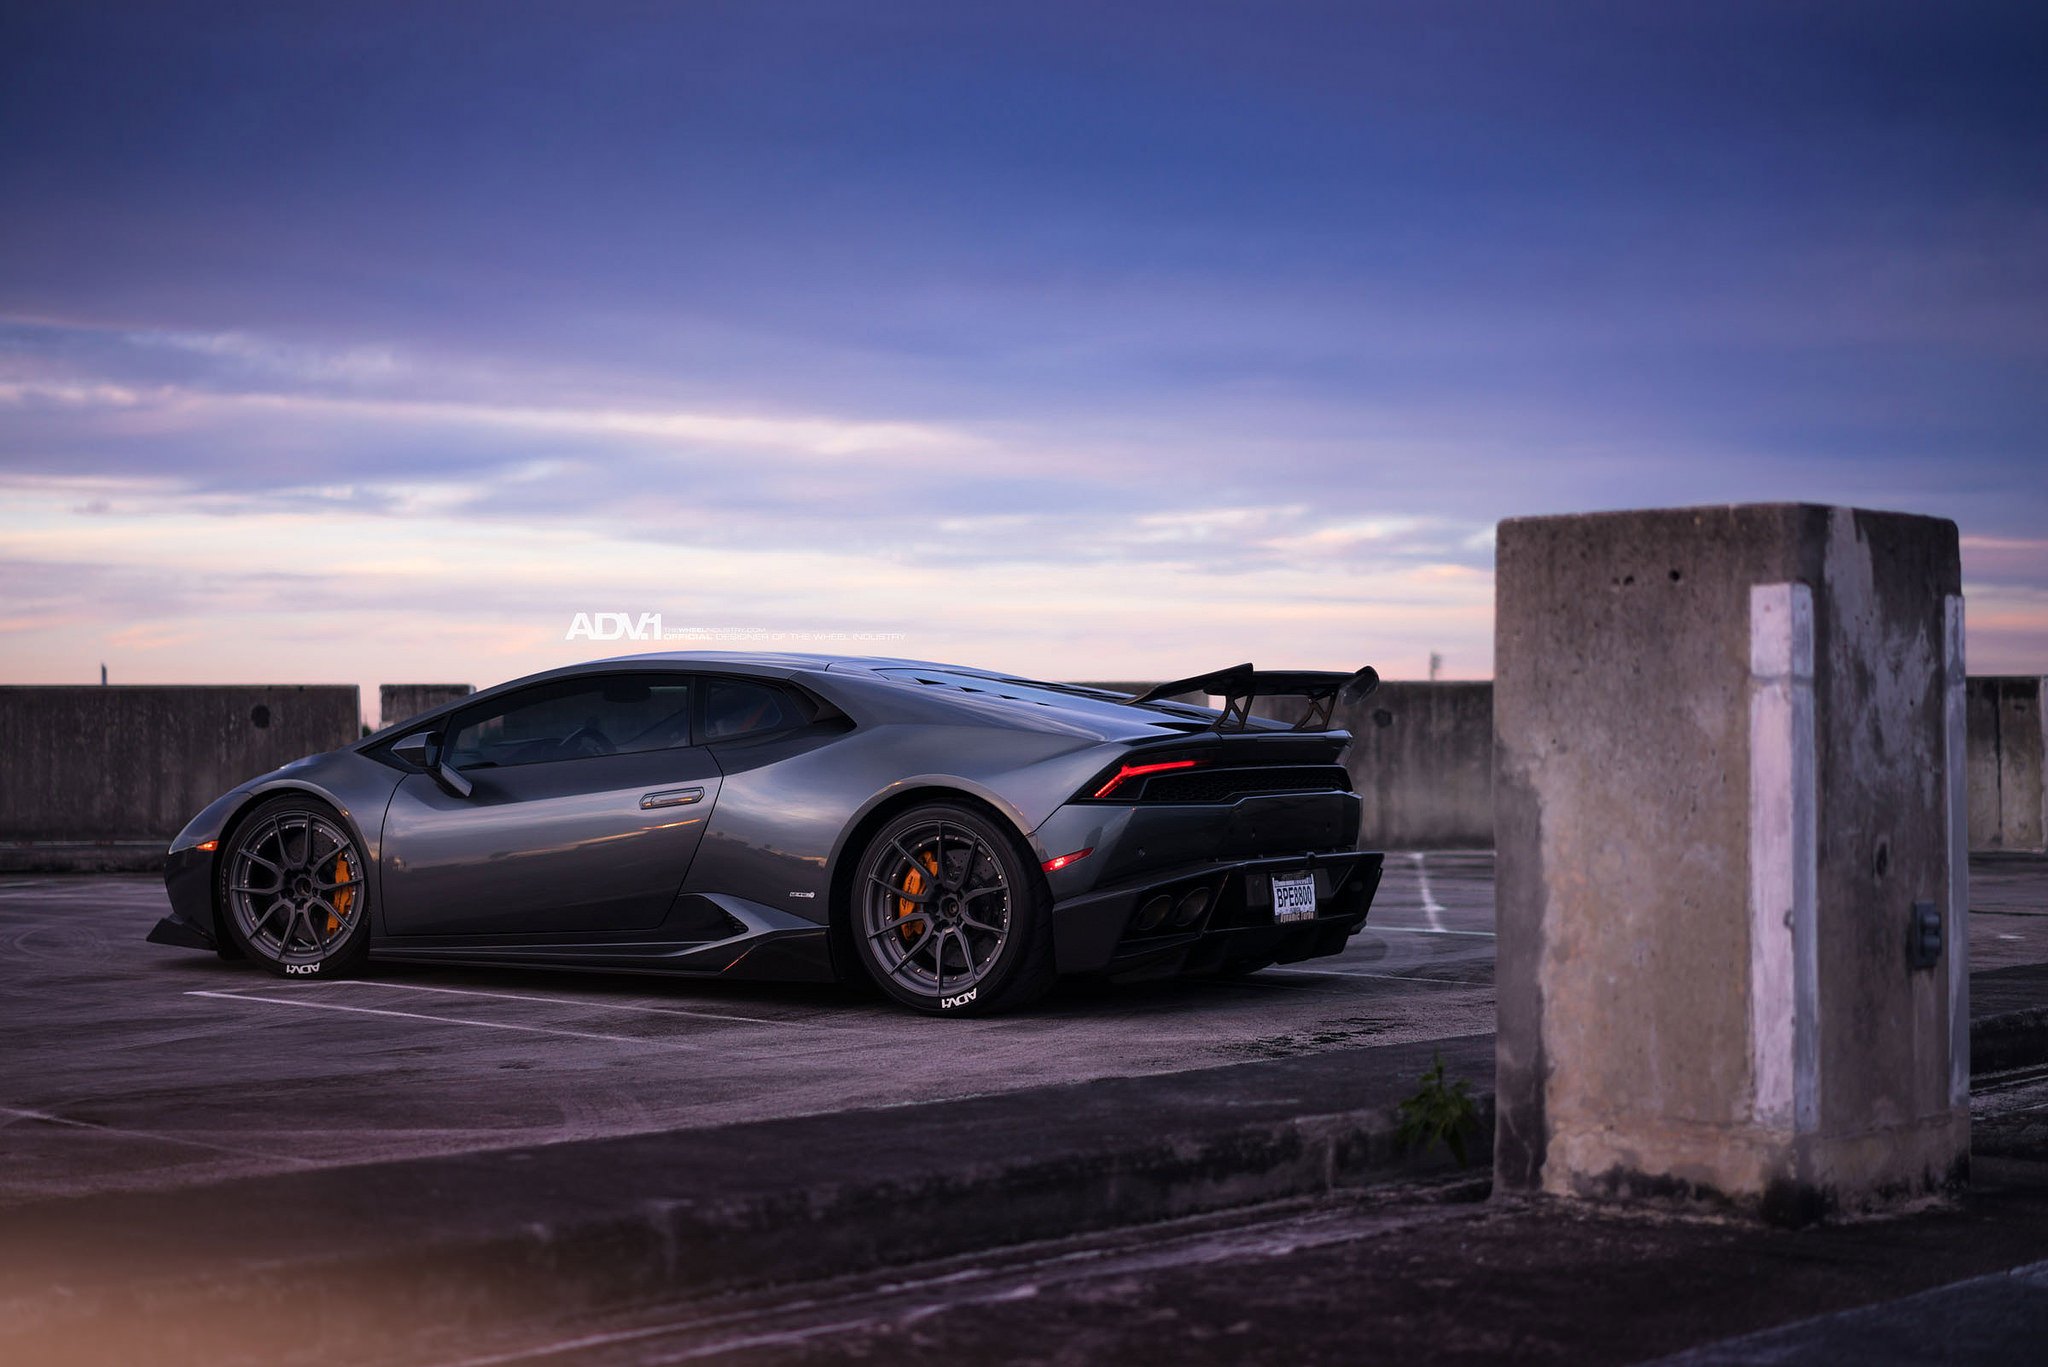 Gray Lamborghini Huracan With Black Rims - Photo by ADV.1